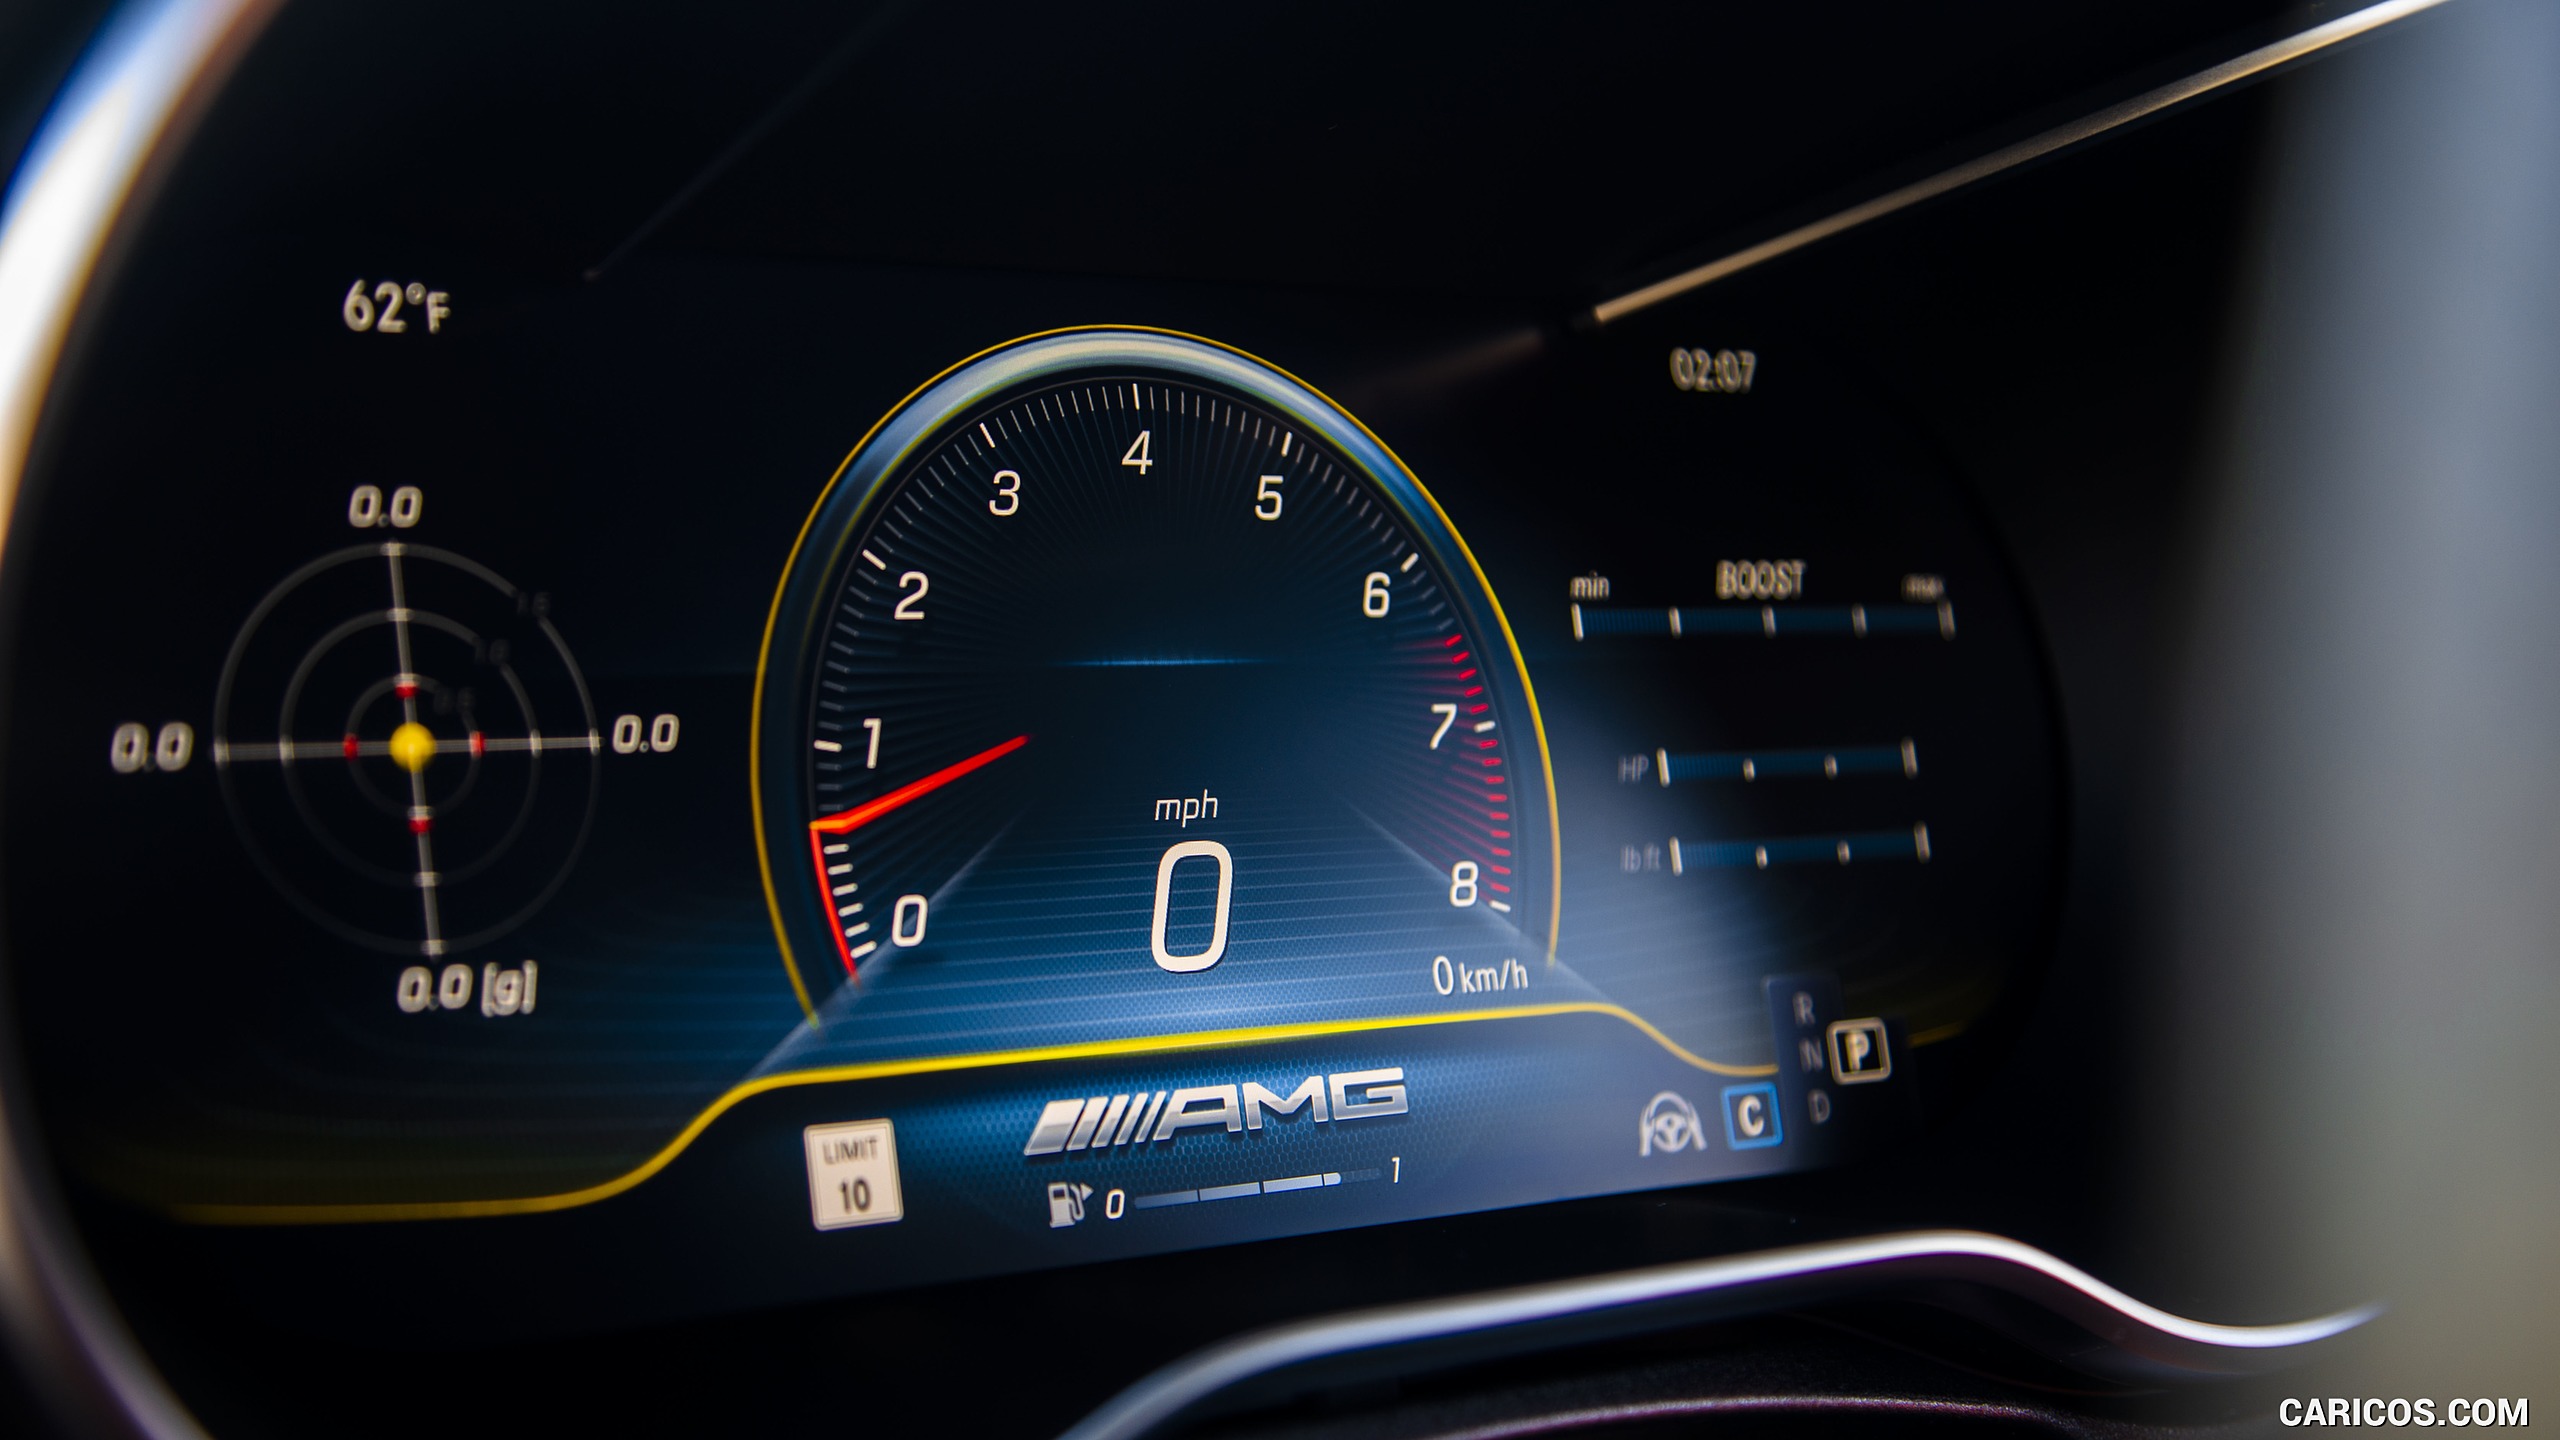 2019 Mercedes-AMG C43 Coupe (US-Spec) - Digital Instrument Cluster, #178 of 184